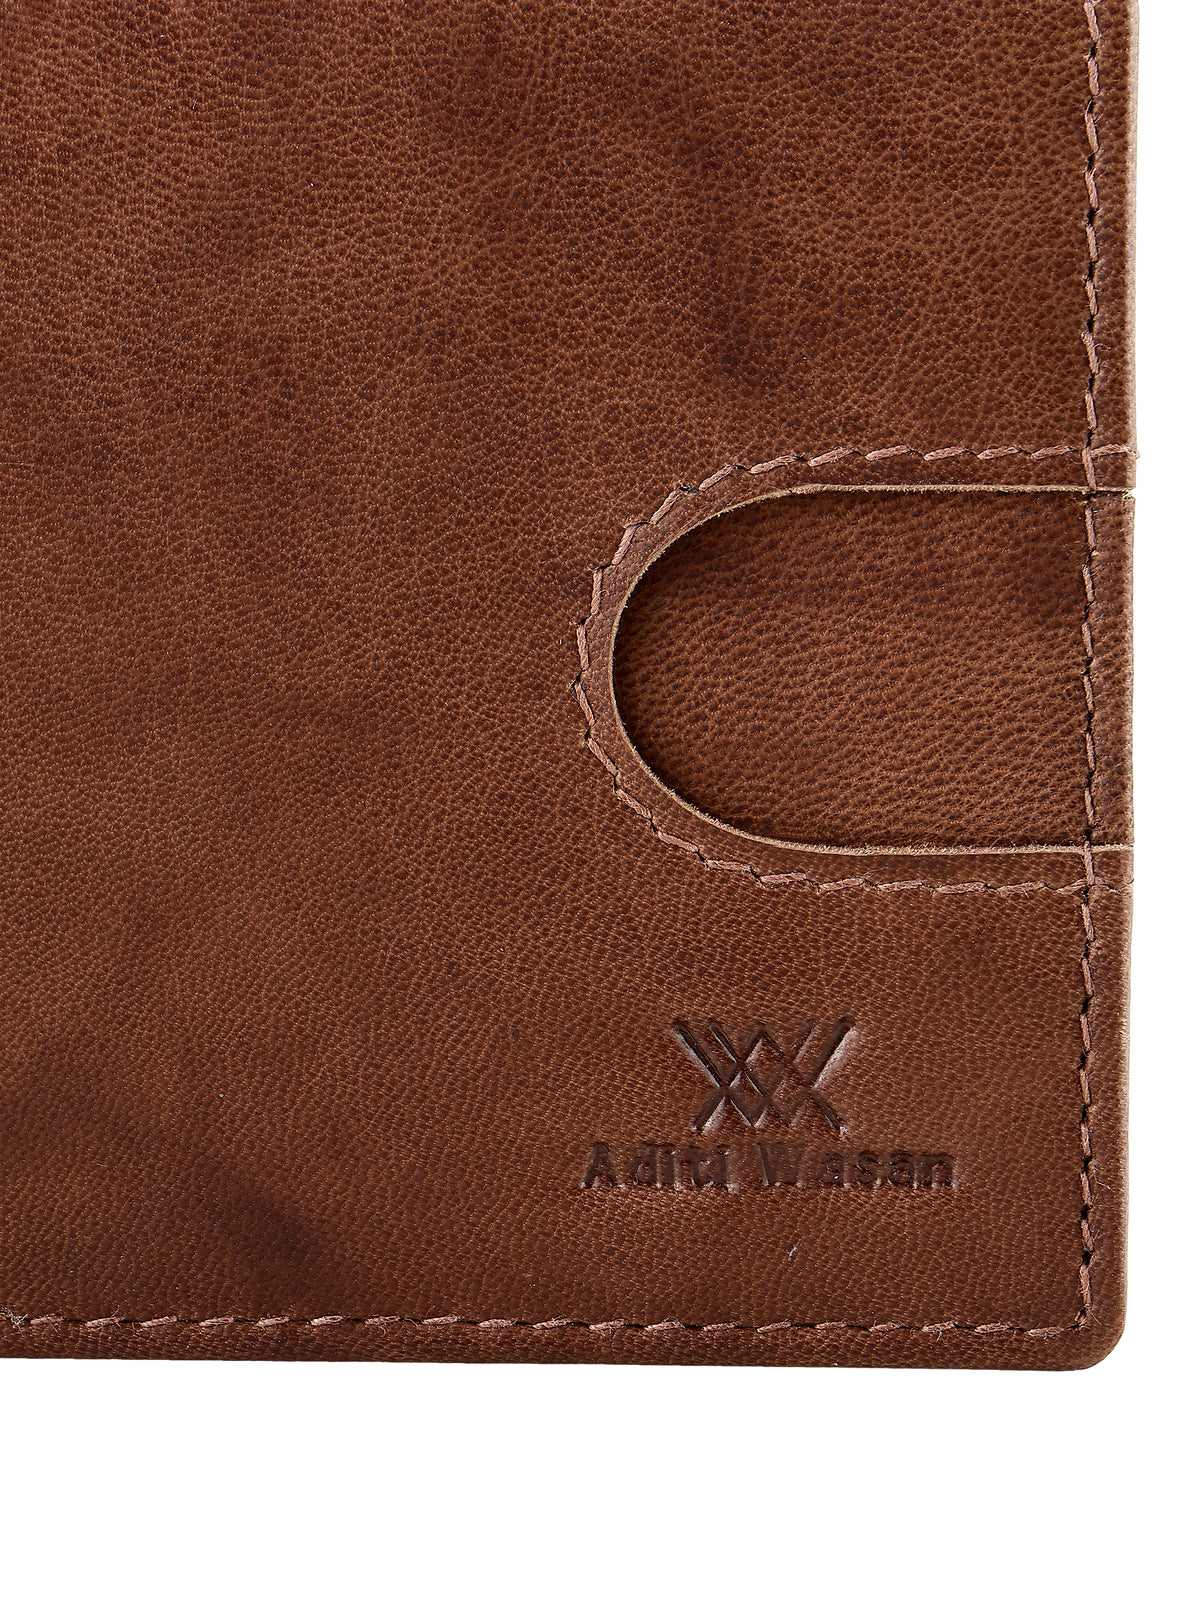 Brown Genuine Leather Pop-up Slim Wallet Card Holder